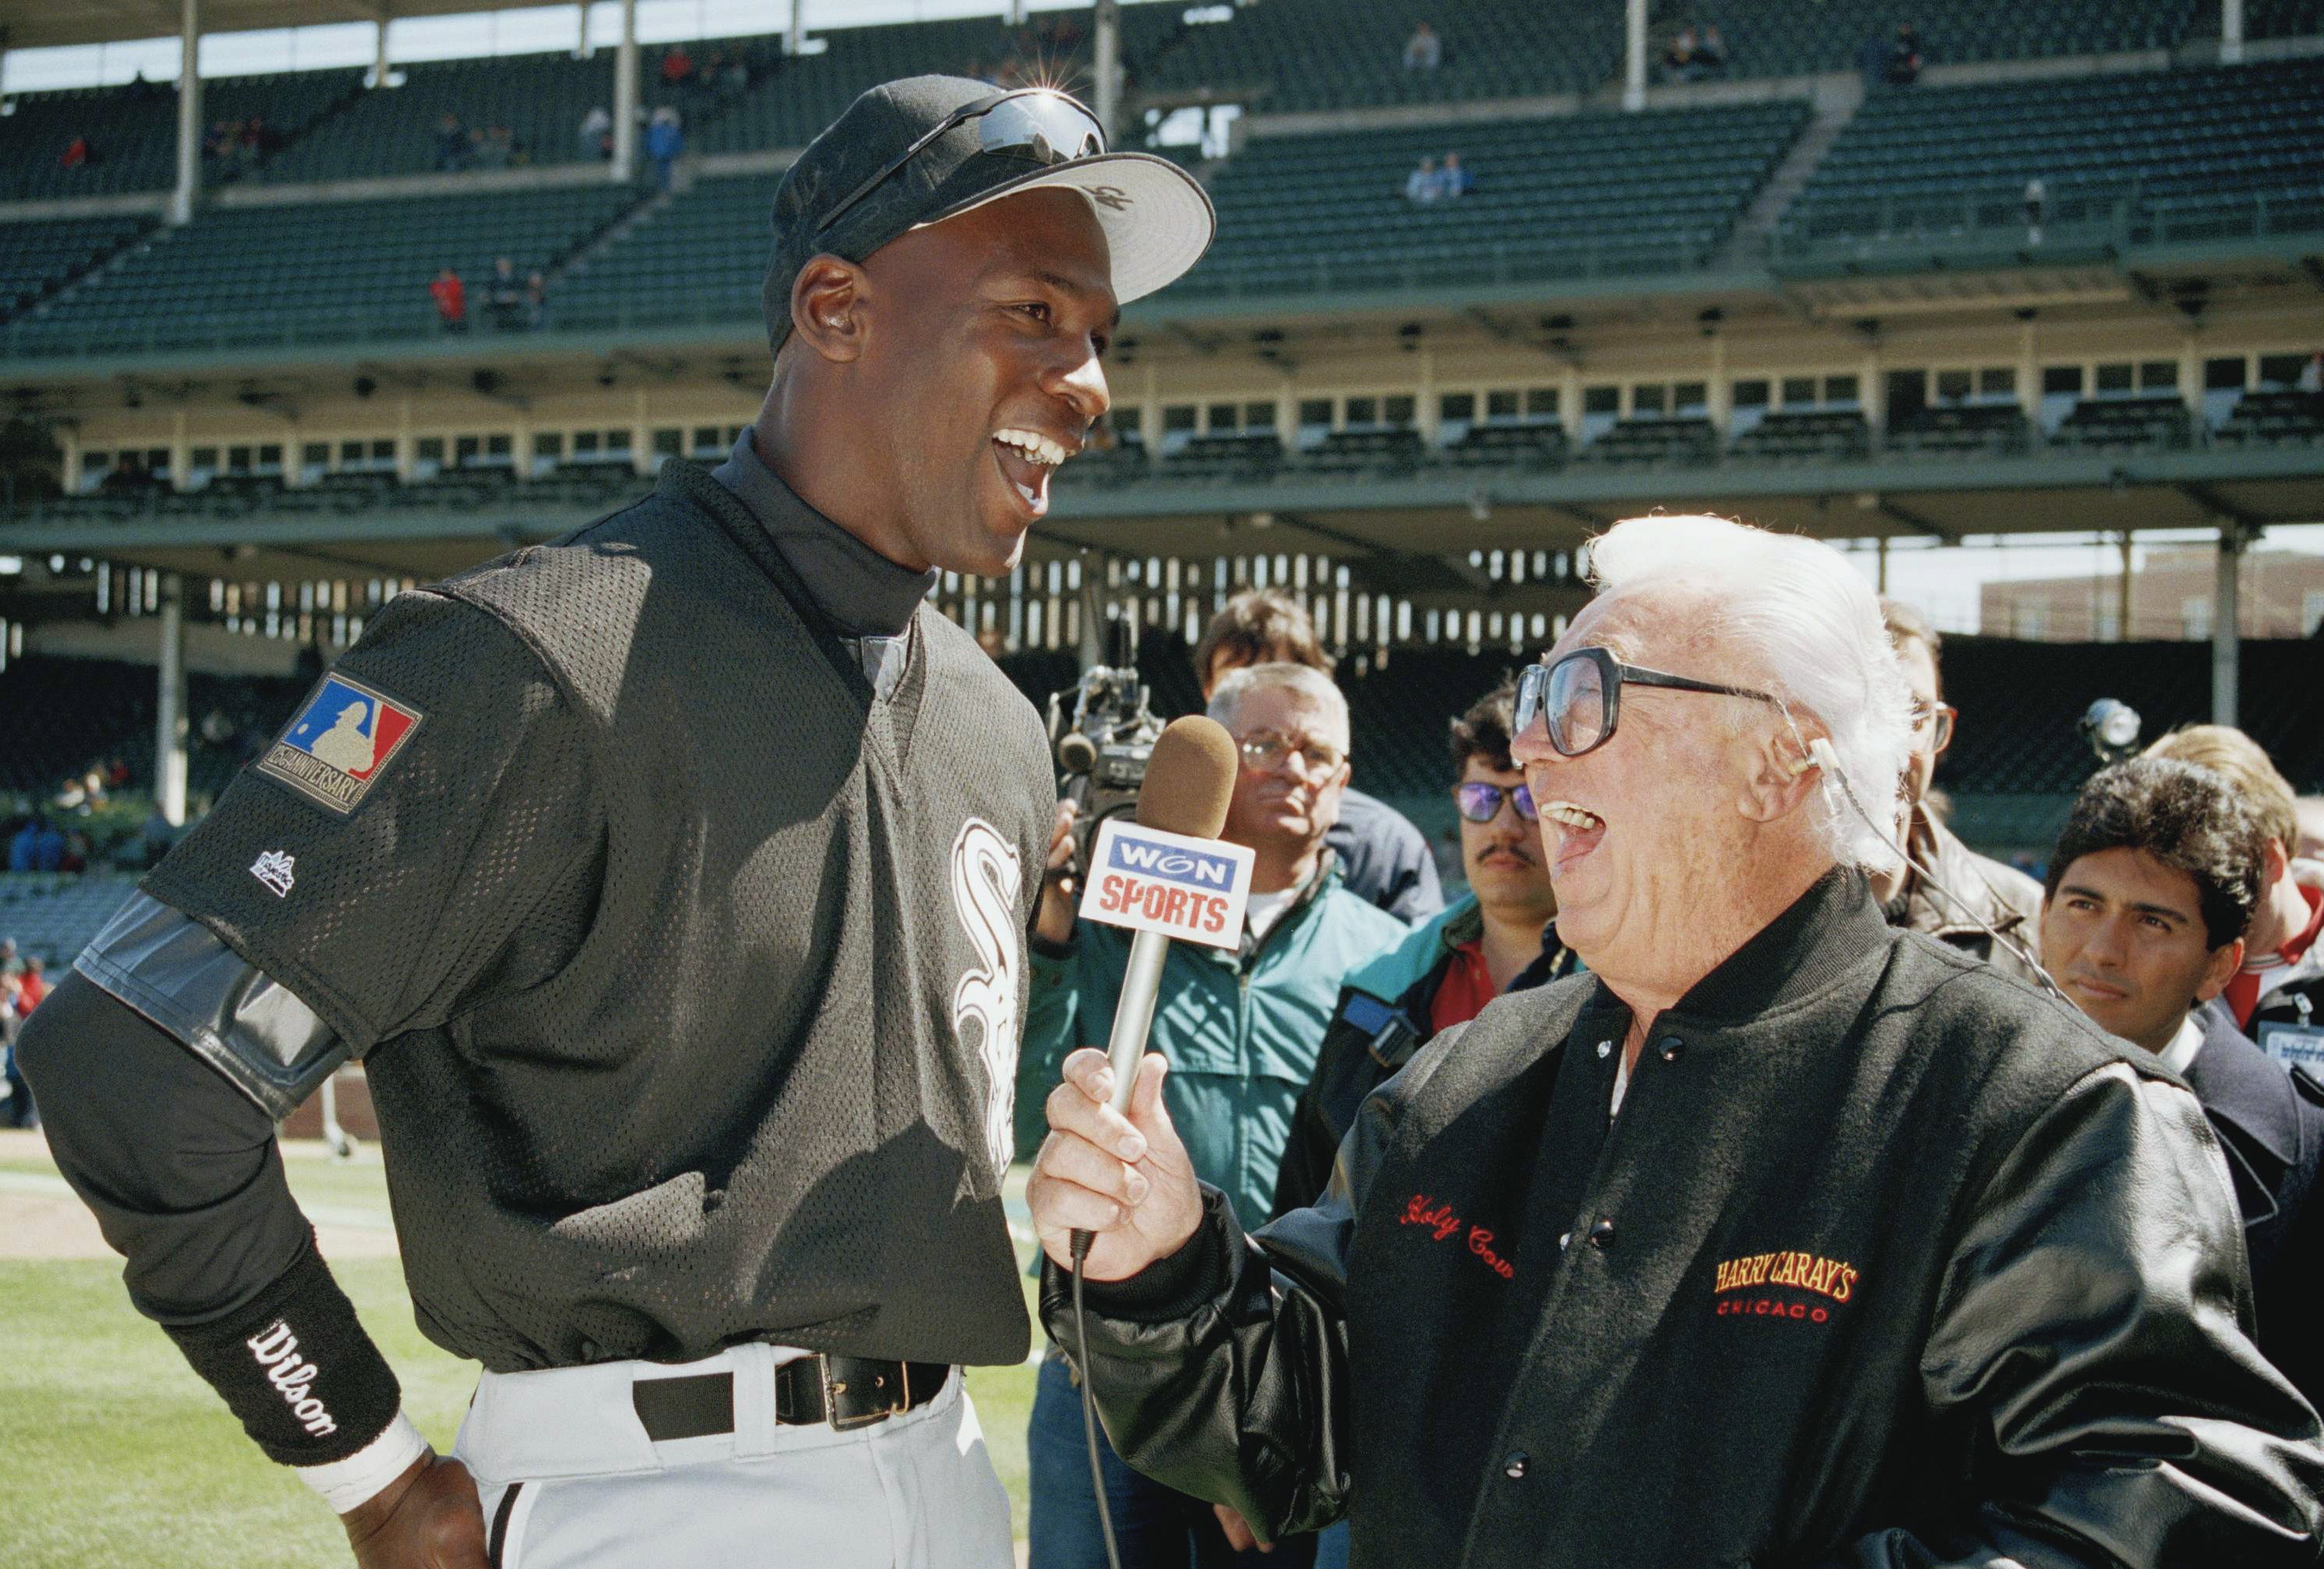 A Video Look Back into the Baseball Career of Michael Jordan